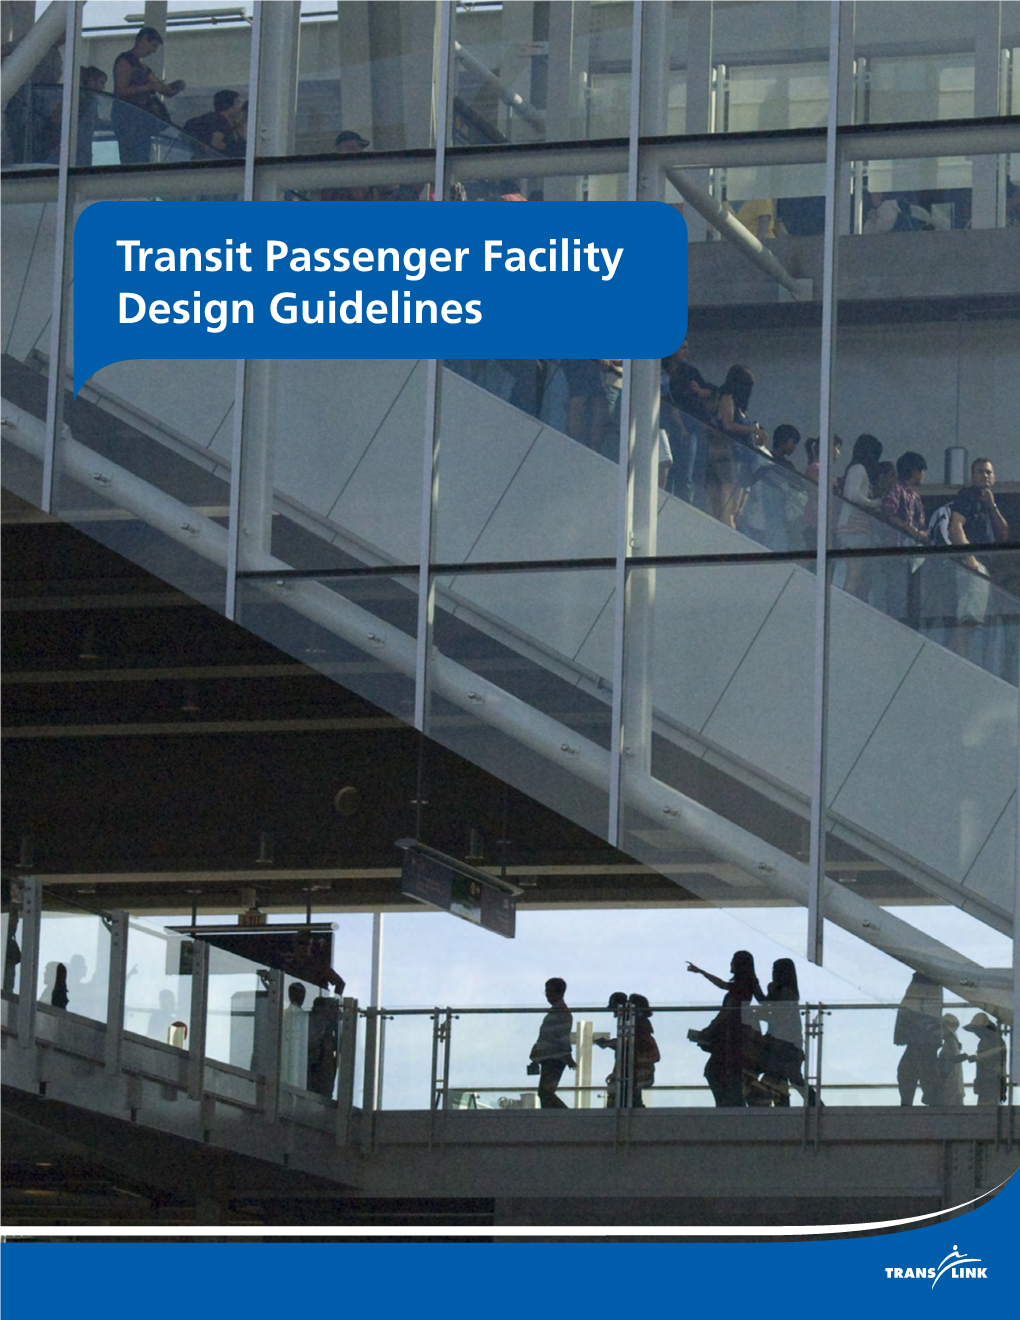 Transit Passenger Facilities Design Guidelines